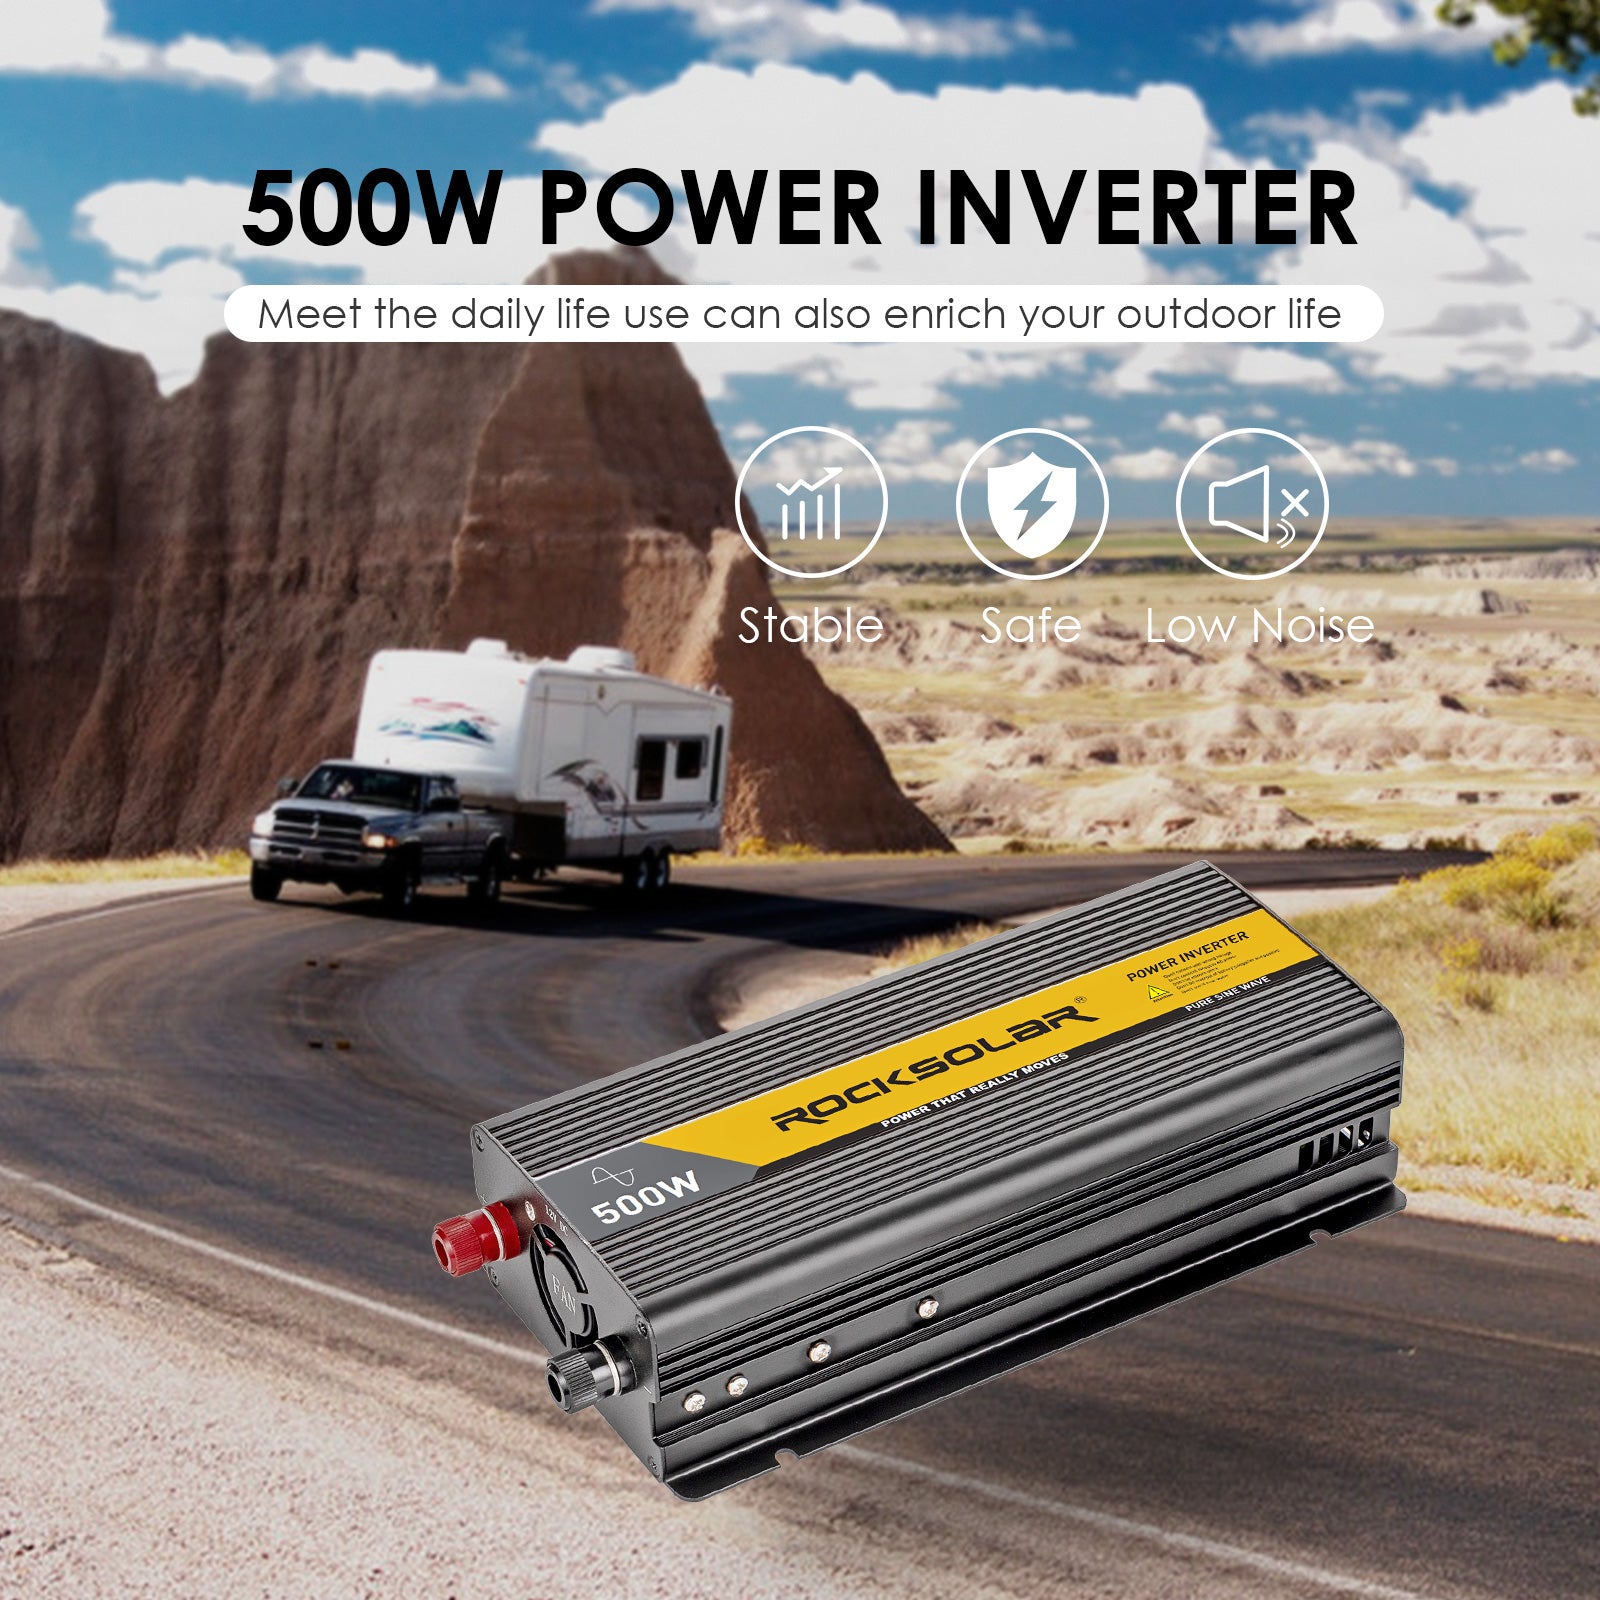 500W 12V Power Inverter | Pure Sine Wave Inverter for Home and RV